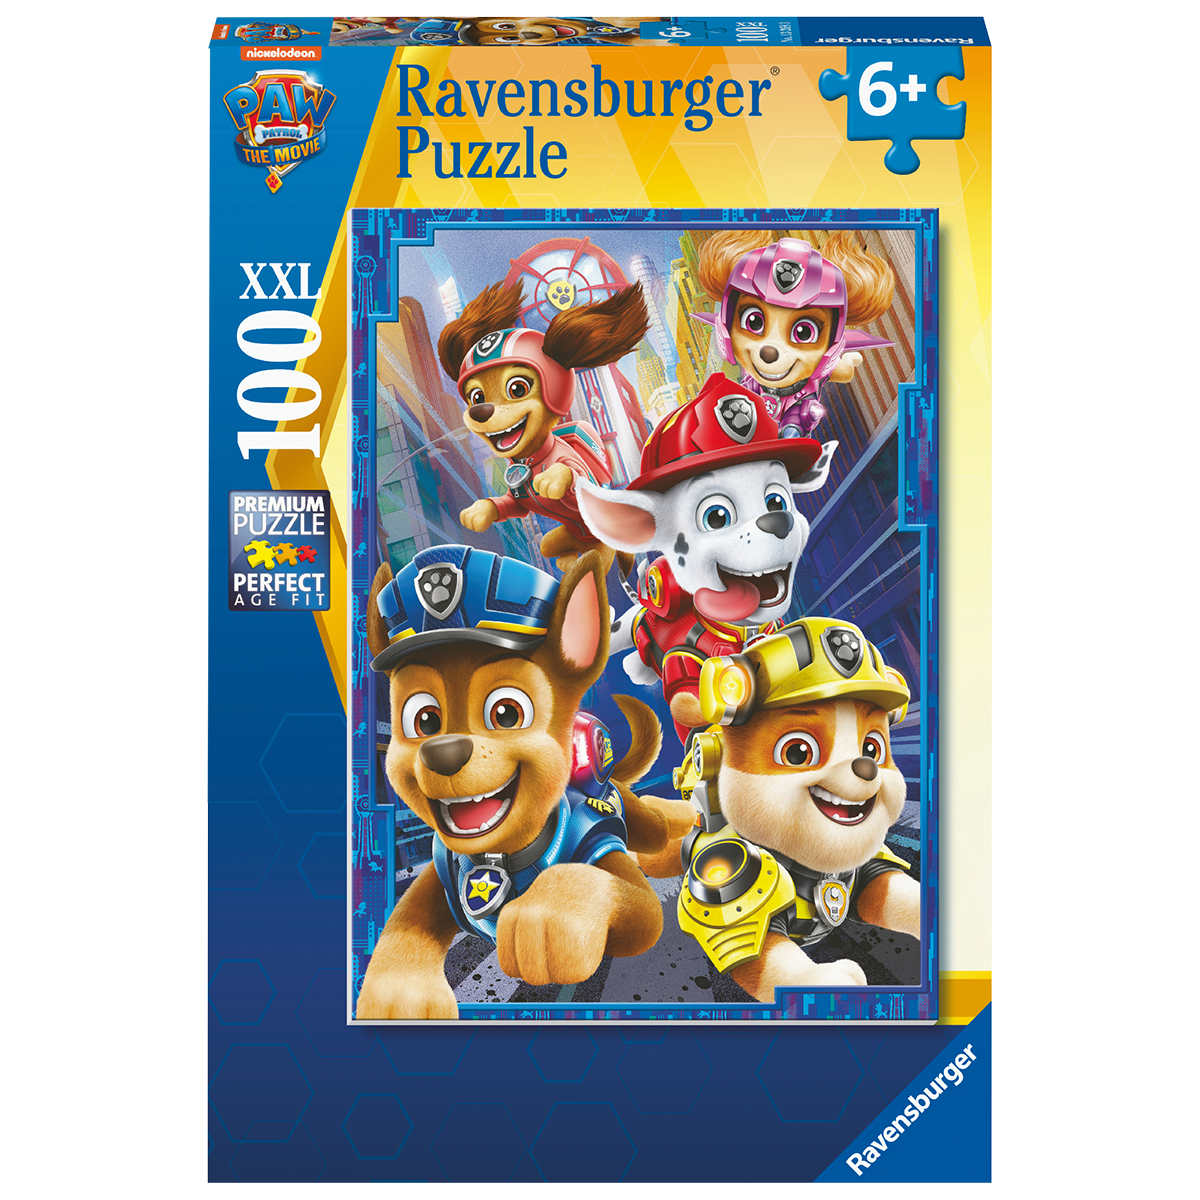 Ravensburger puzzle 100 pezzi - paw patrol movie - RAVENSBURGER, Paw Patrol